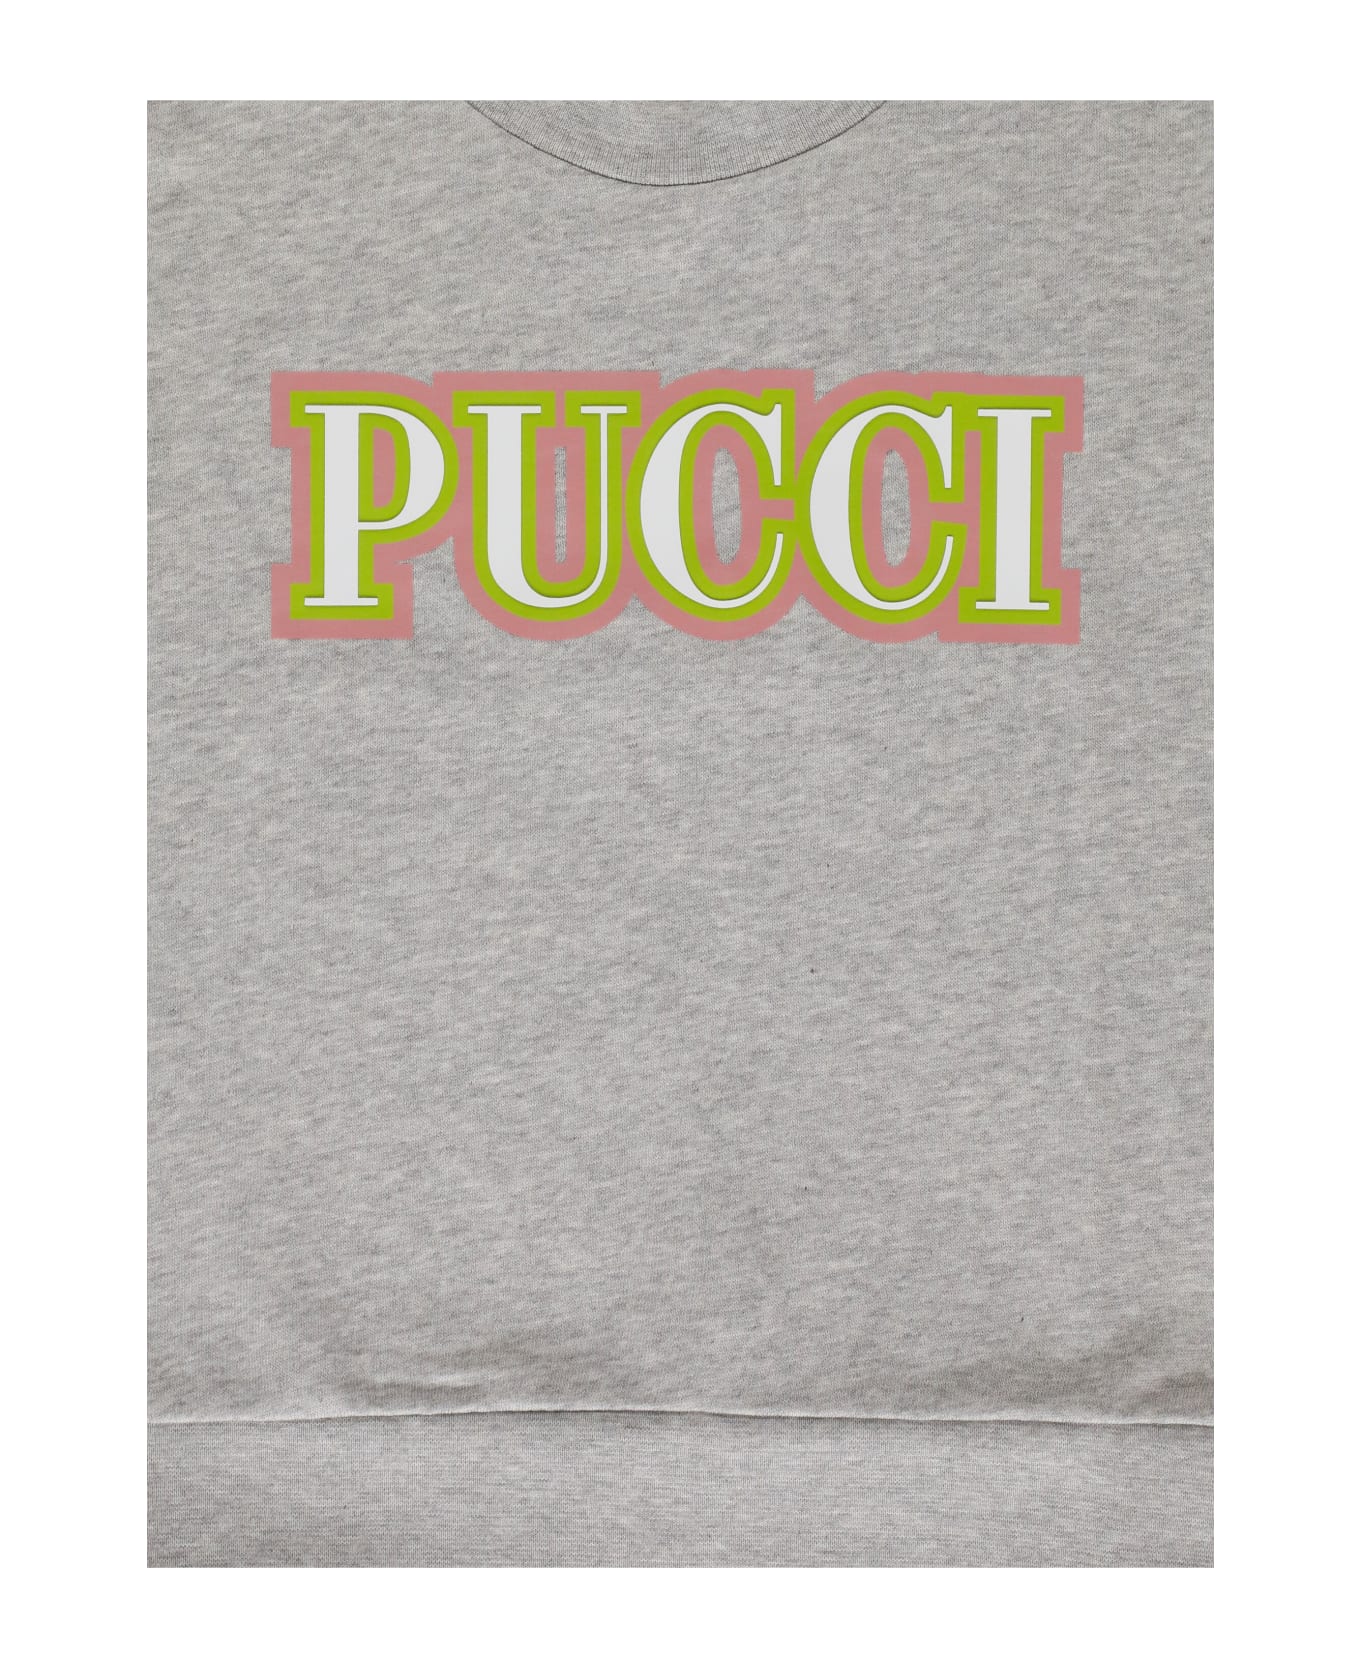 Pucci Sweatshirt With Logo - C